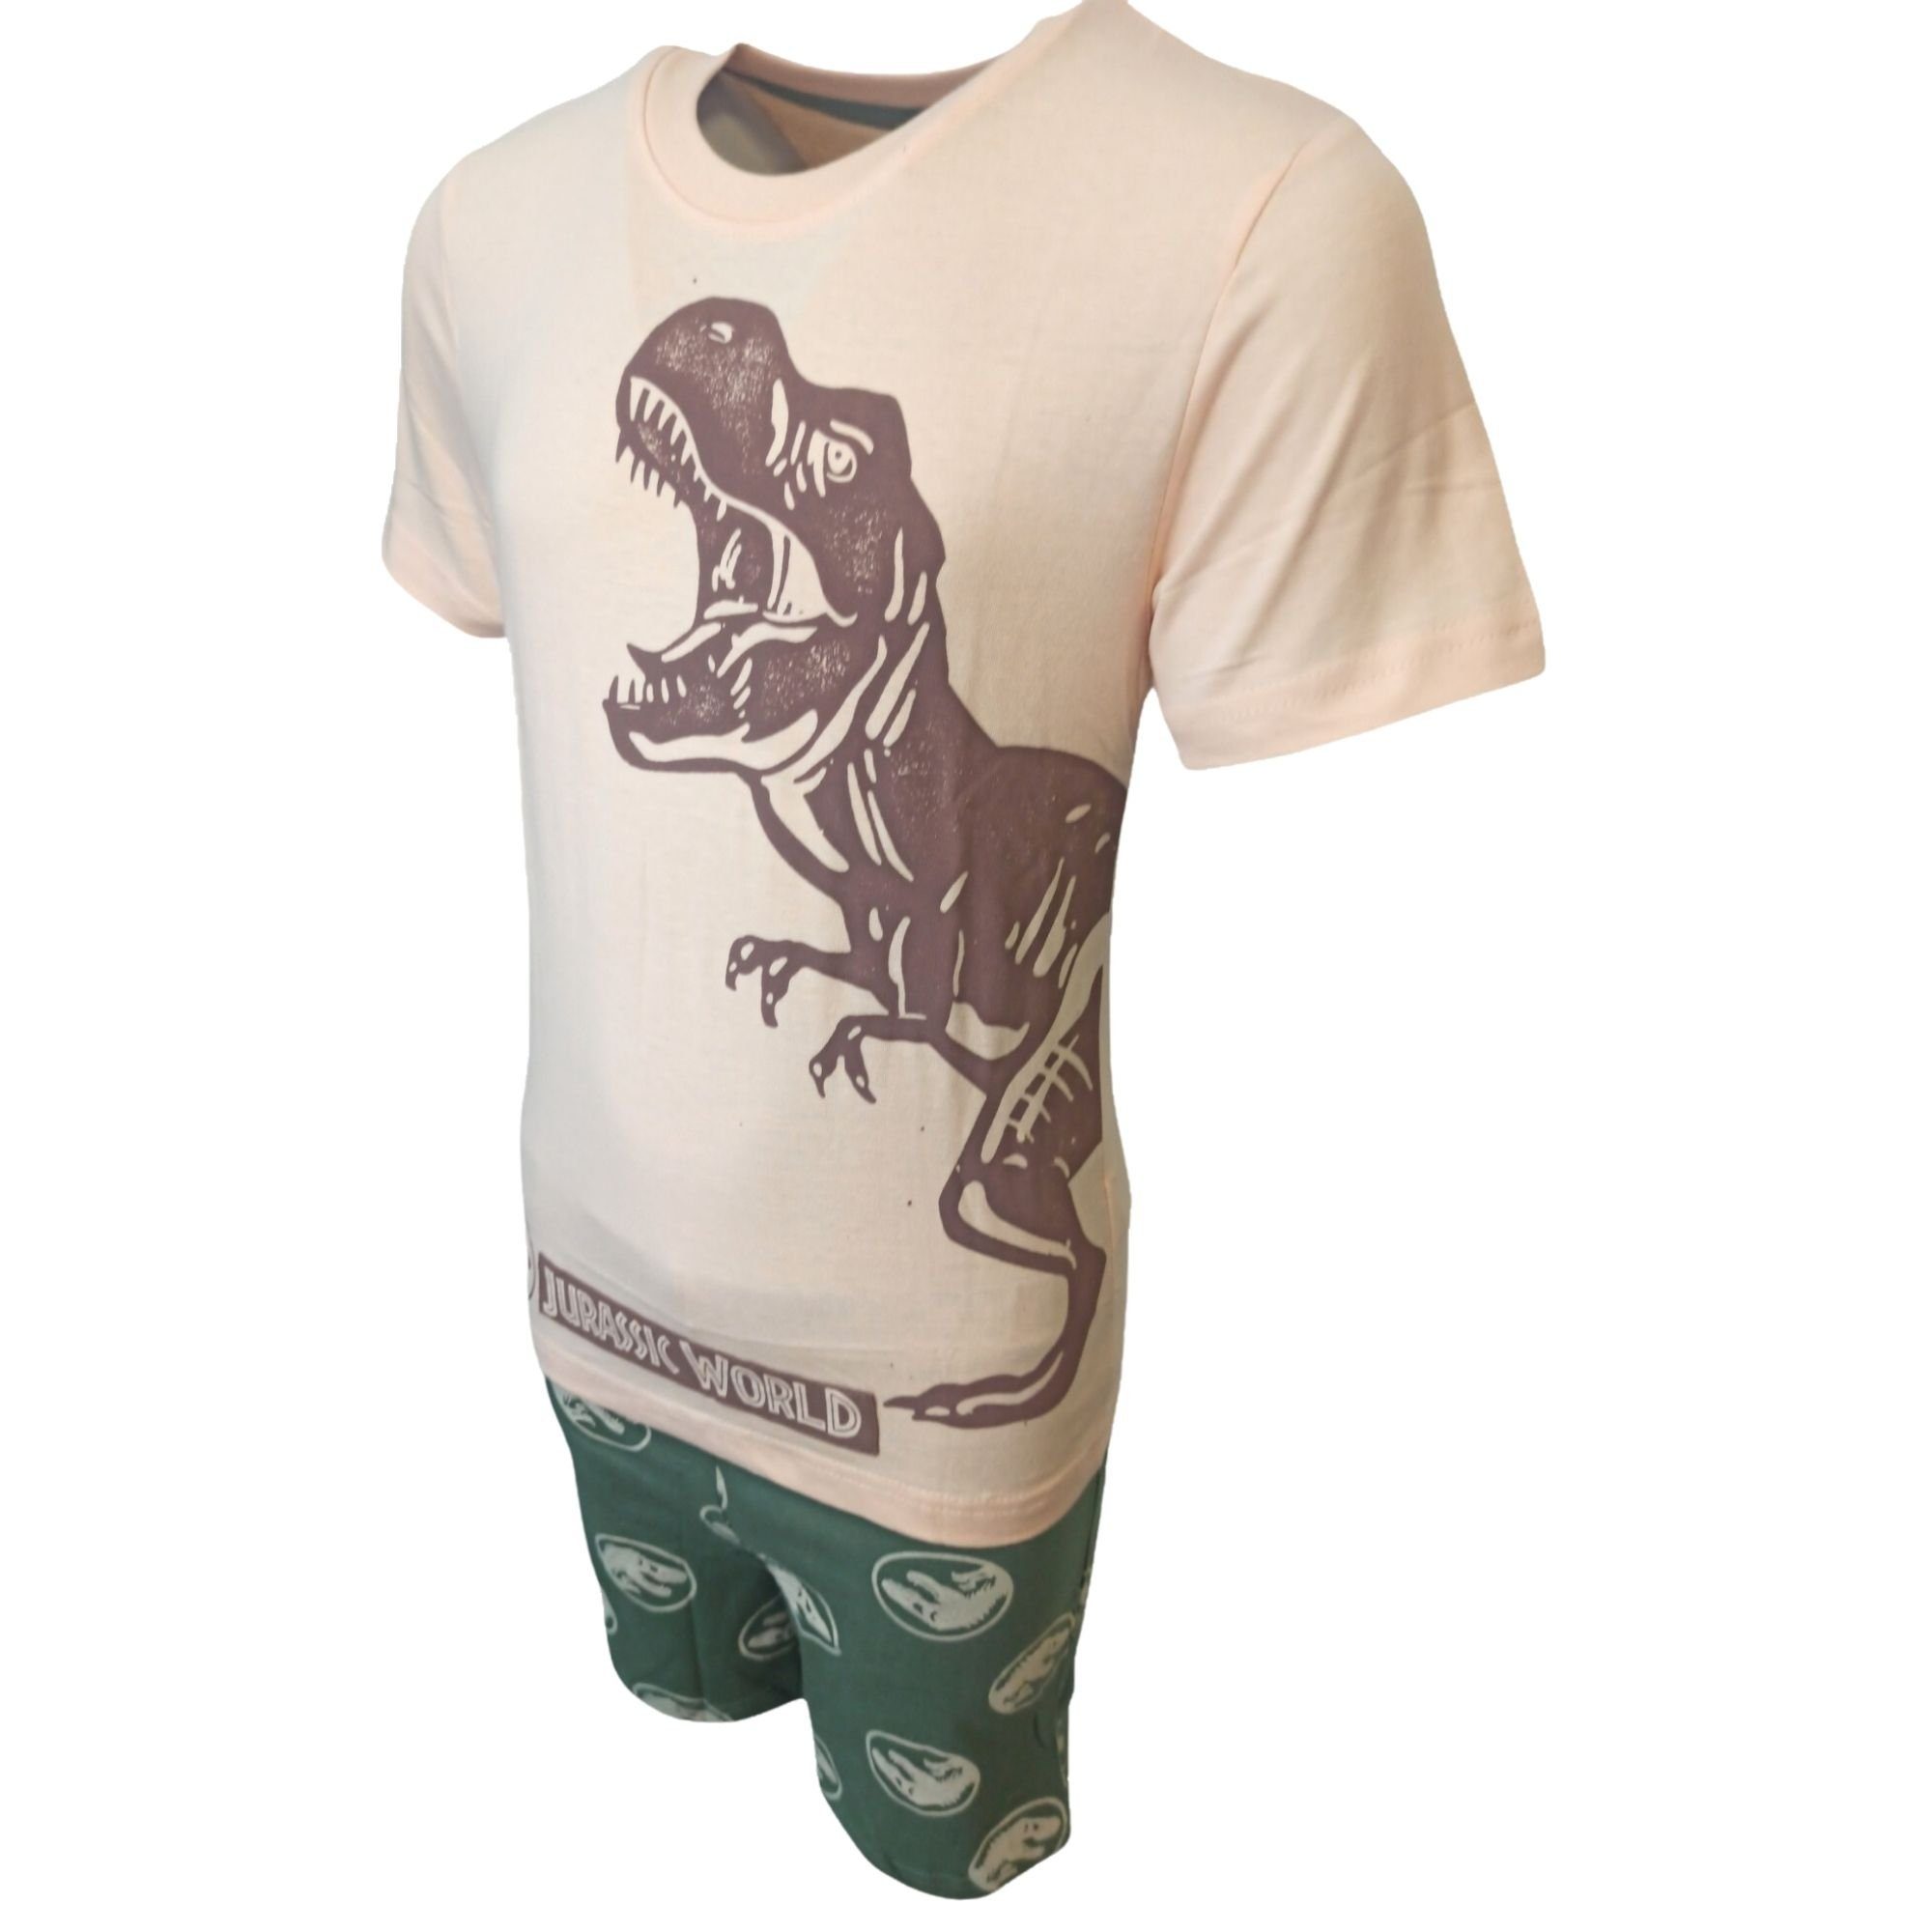 Jurassic World Schlafanzug Dino T-REX Set kurzarm - Shorty Gr. cm tlg) Kinder Pyjama 134-164 (2